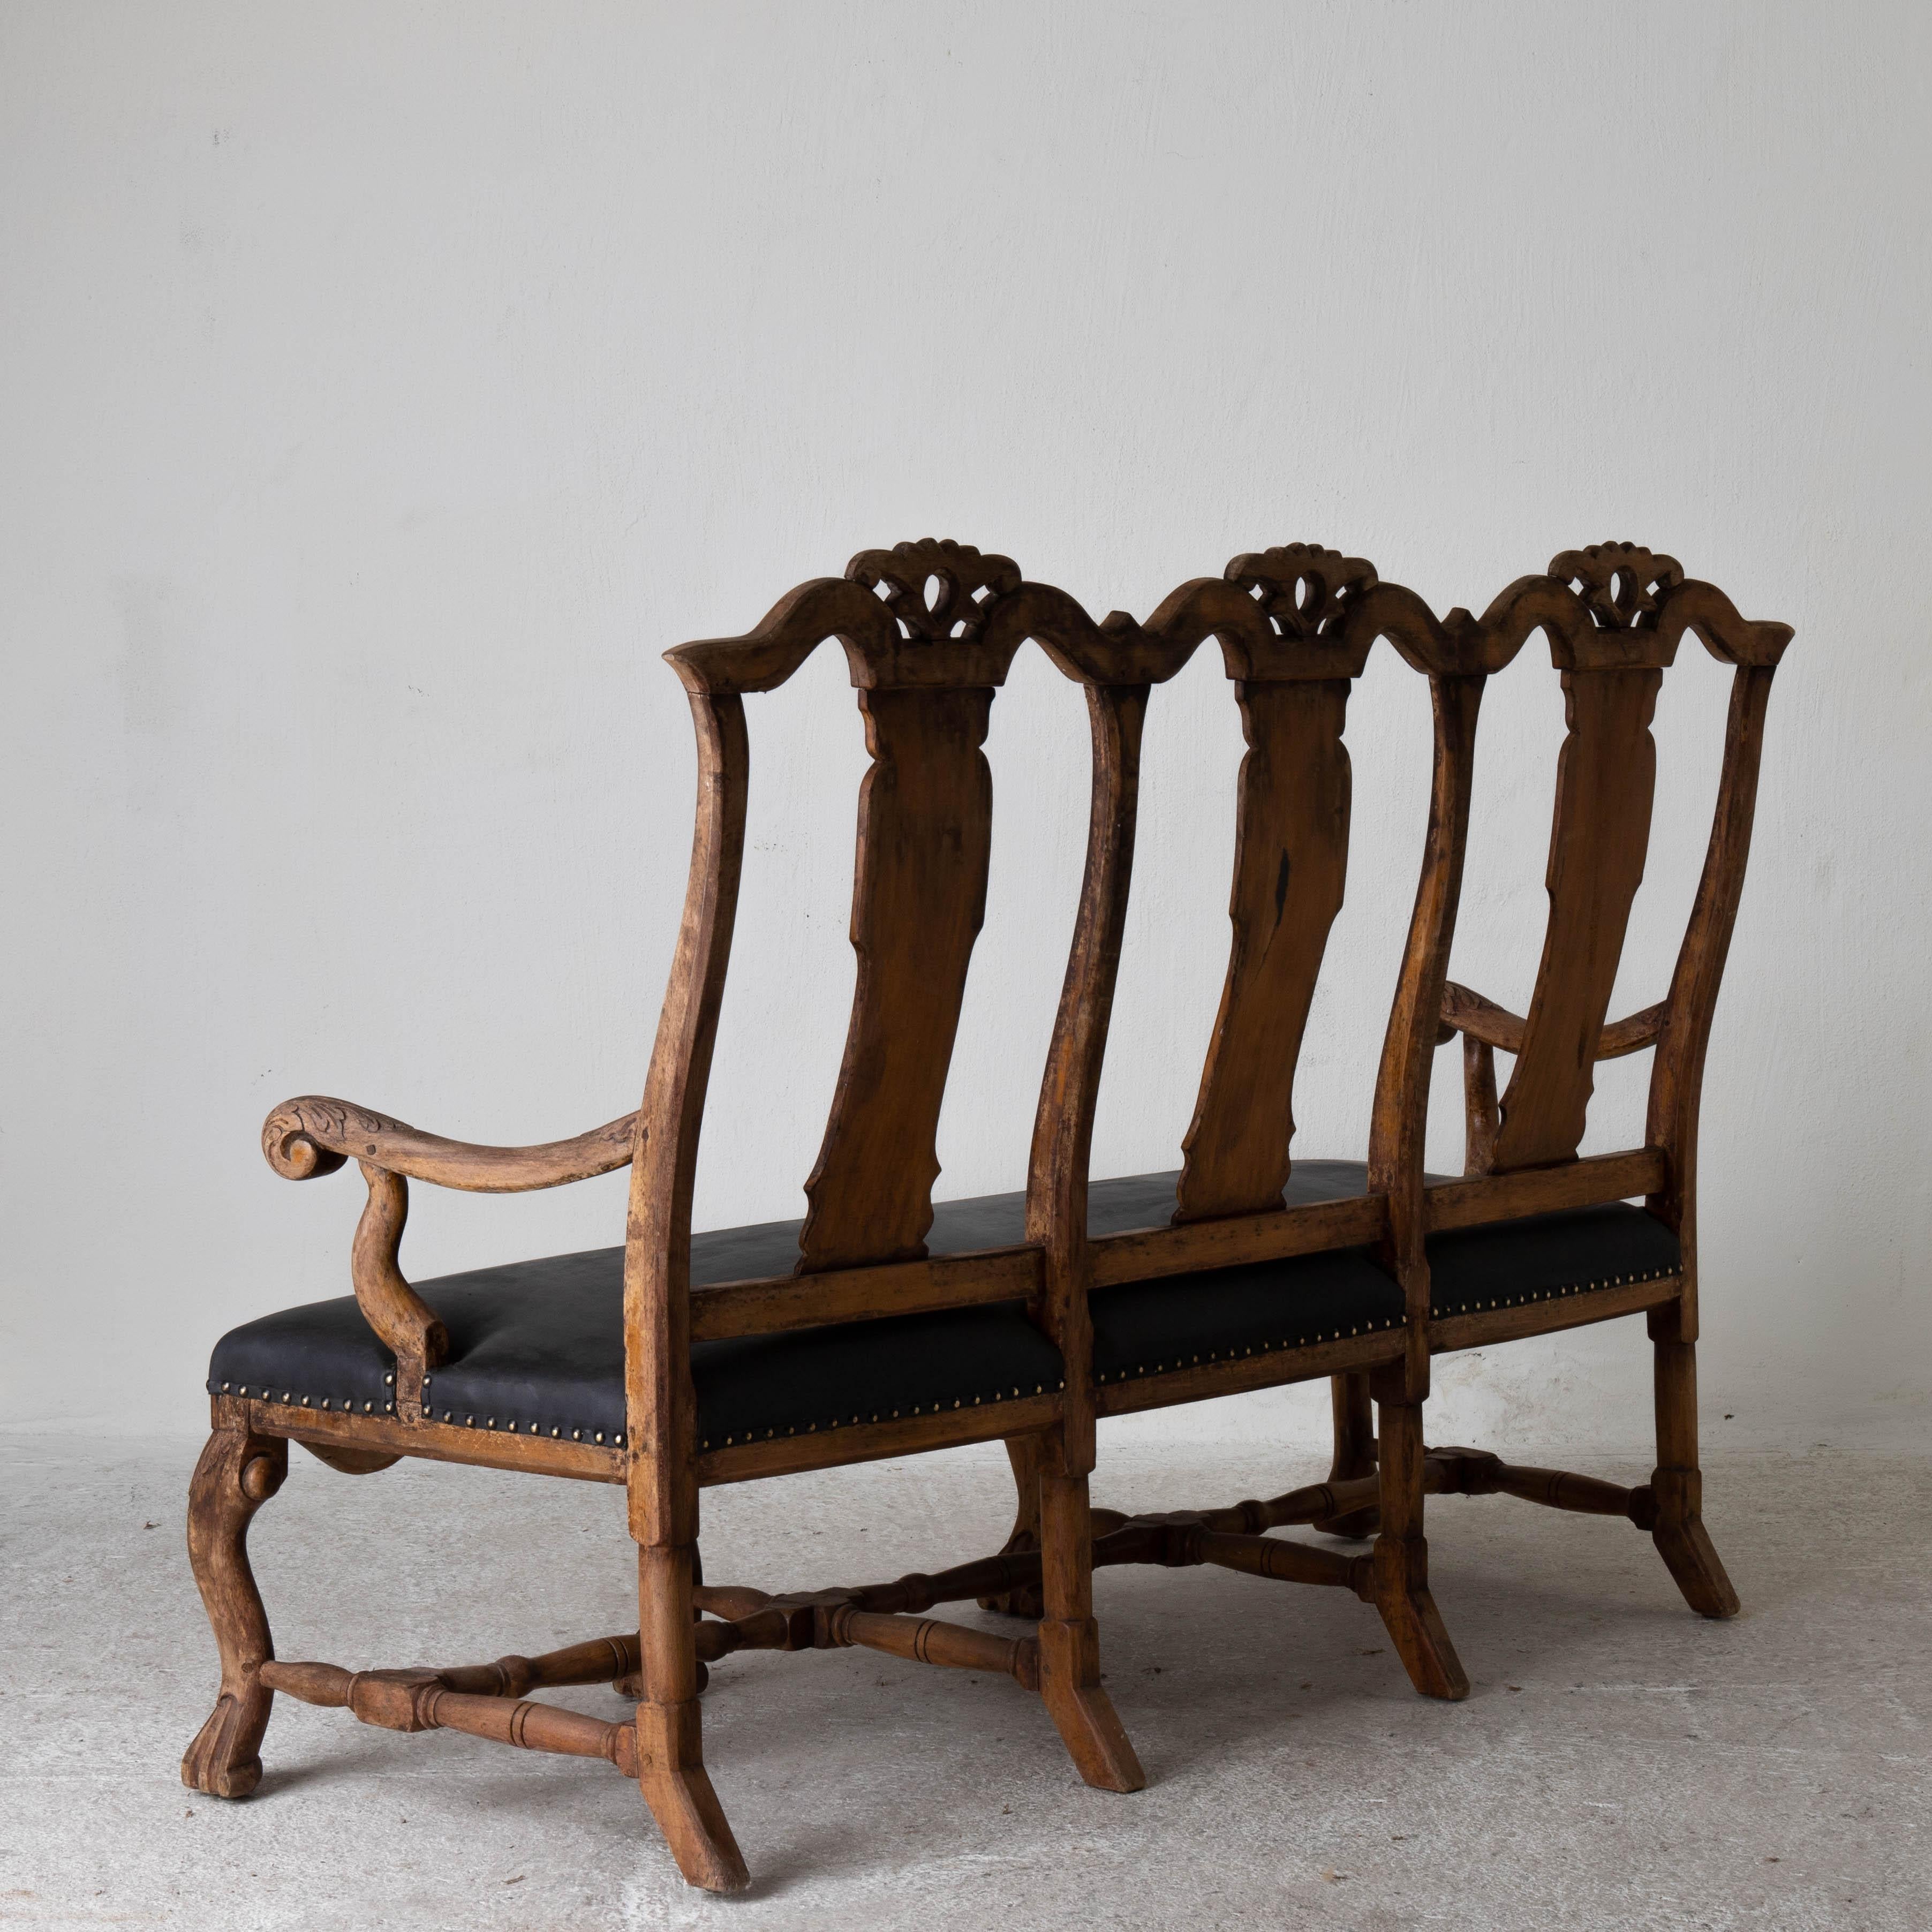 Sofa Bench Swedish Baroque Period 1650-1750 Brown Black, Sweden For Sale 3